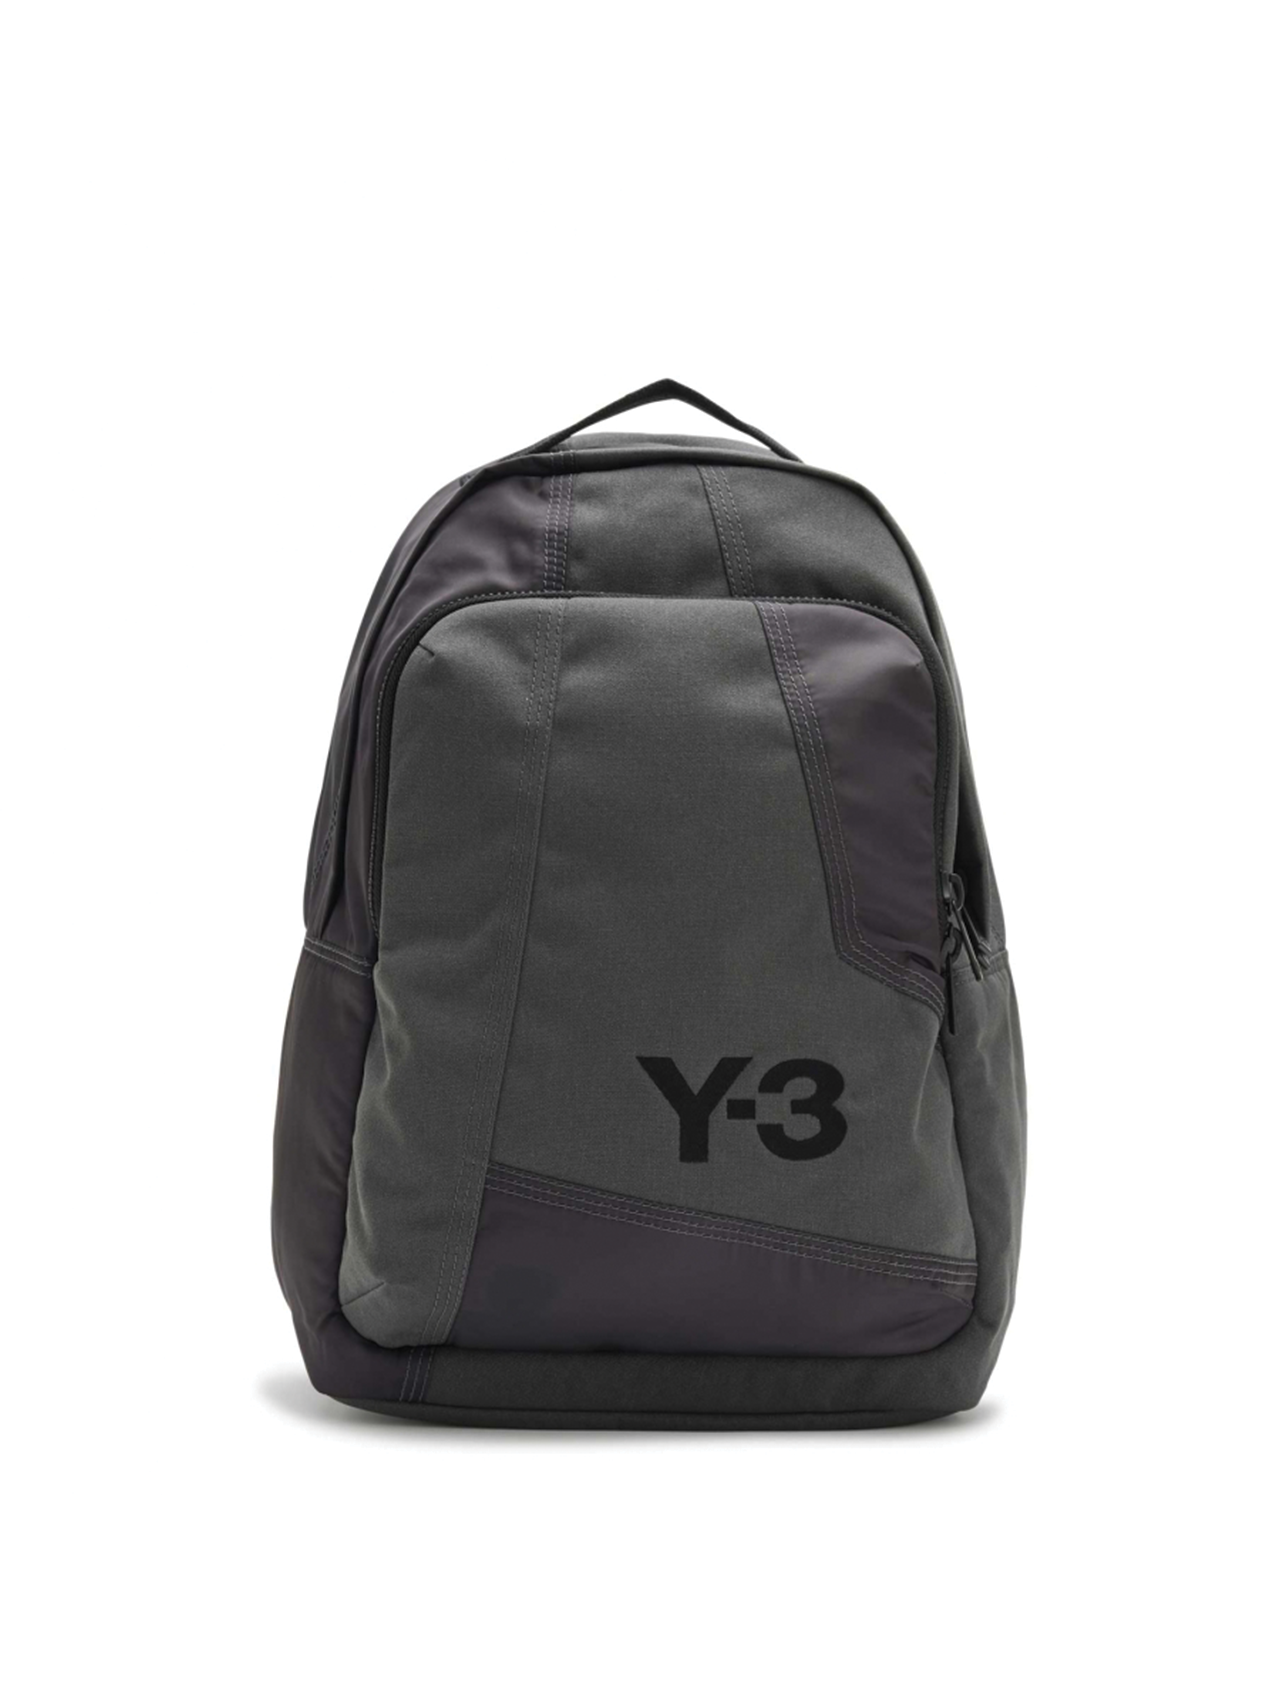 Y-3 Grey Classic Backpack